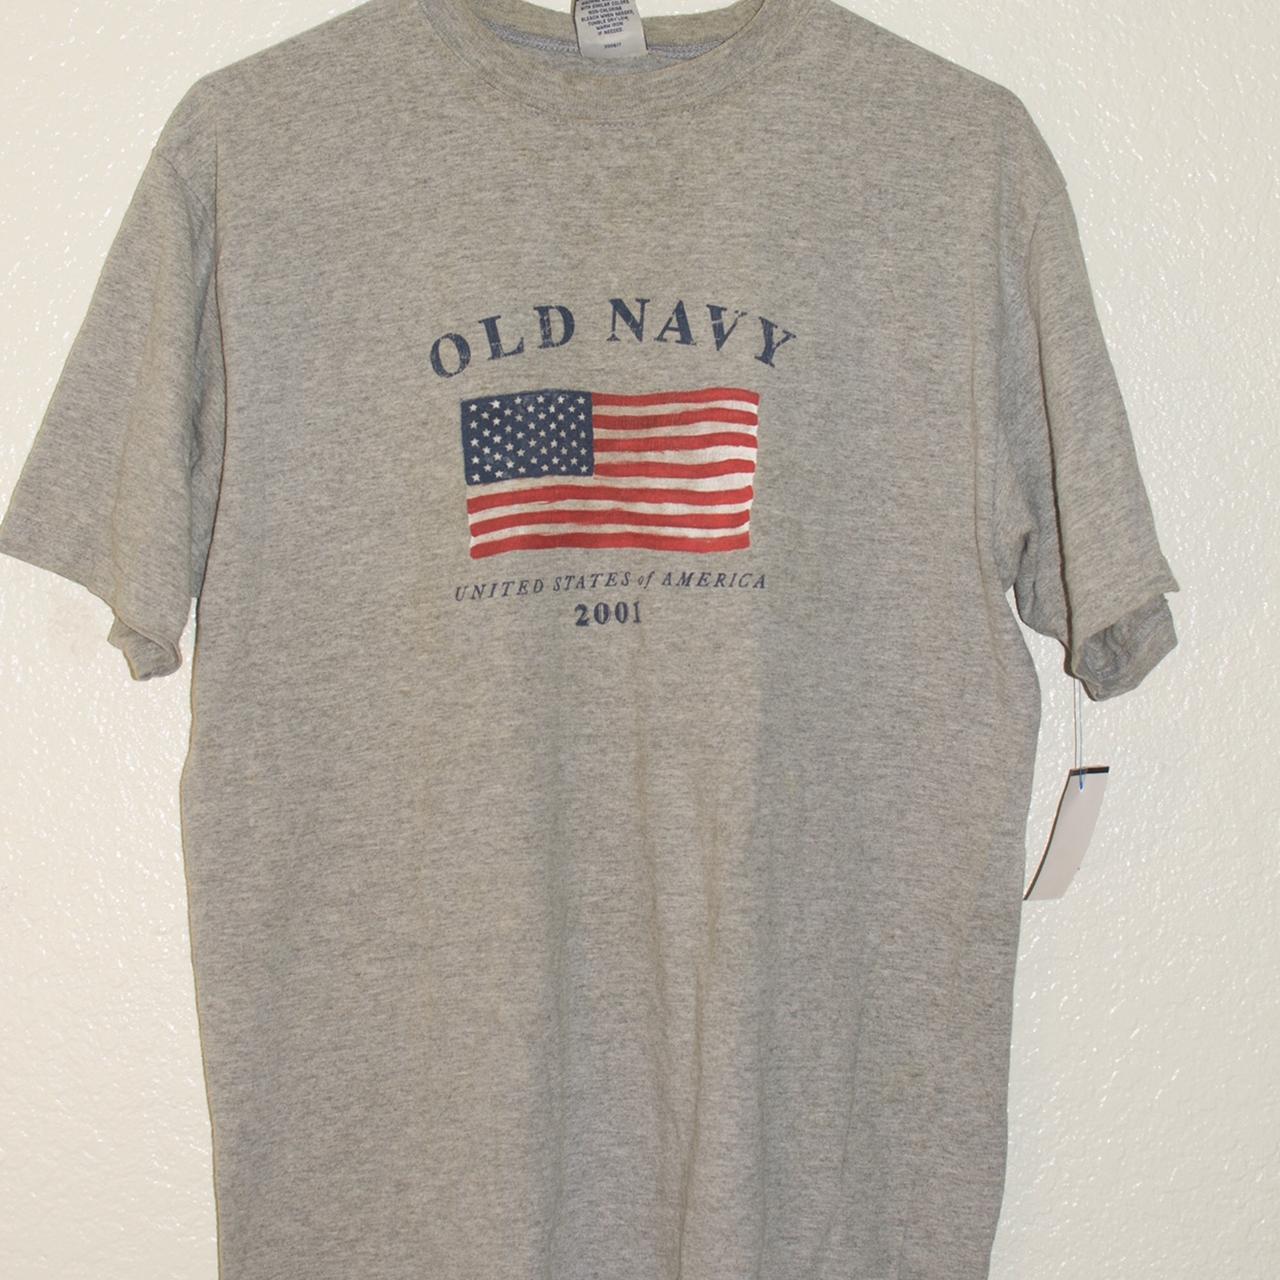 The U.S. Navy American Flag Shirt, Once Navy Always Navy